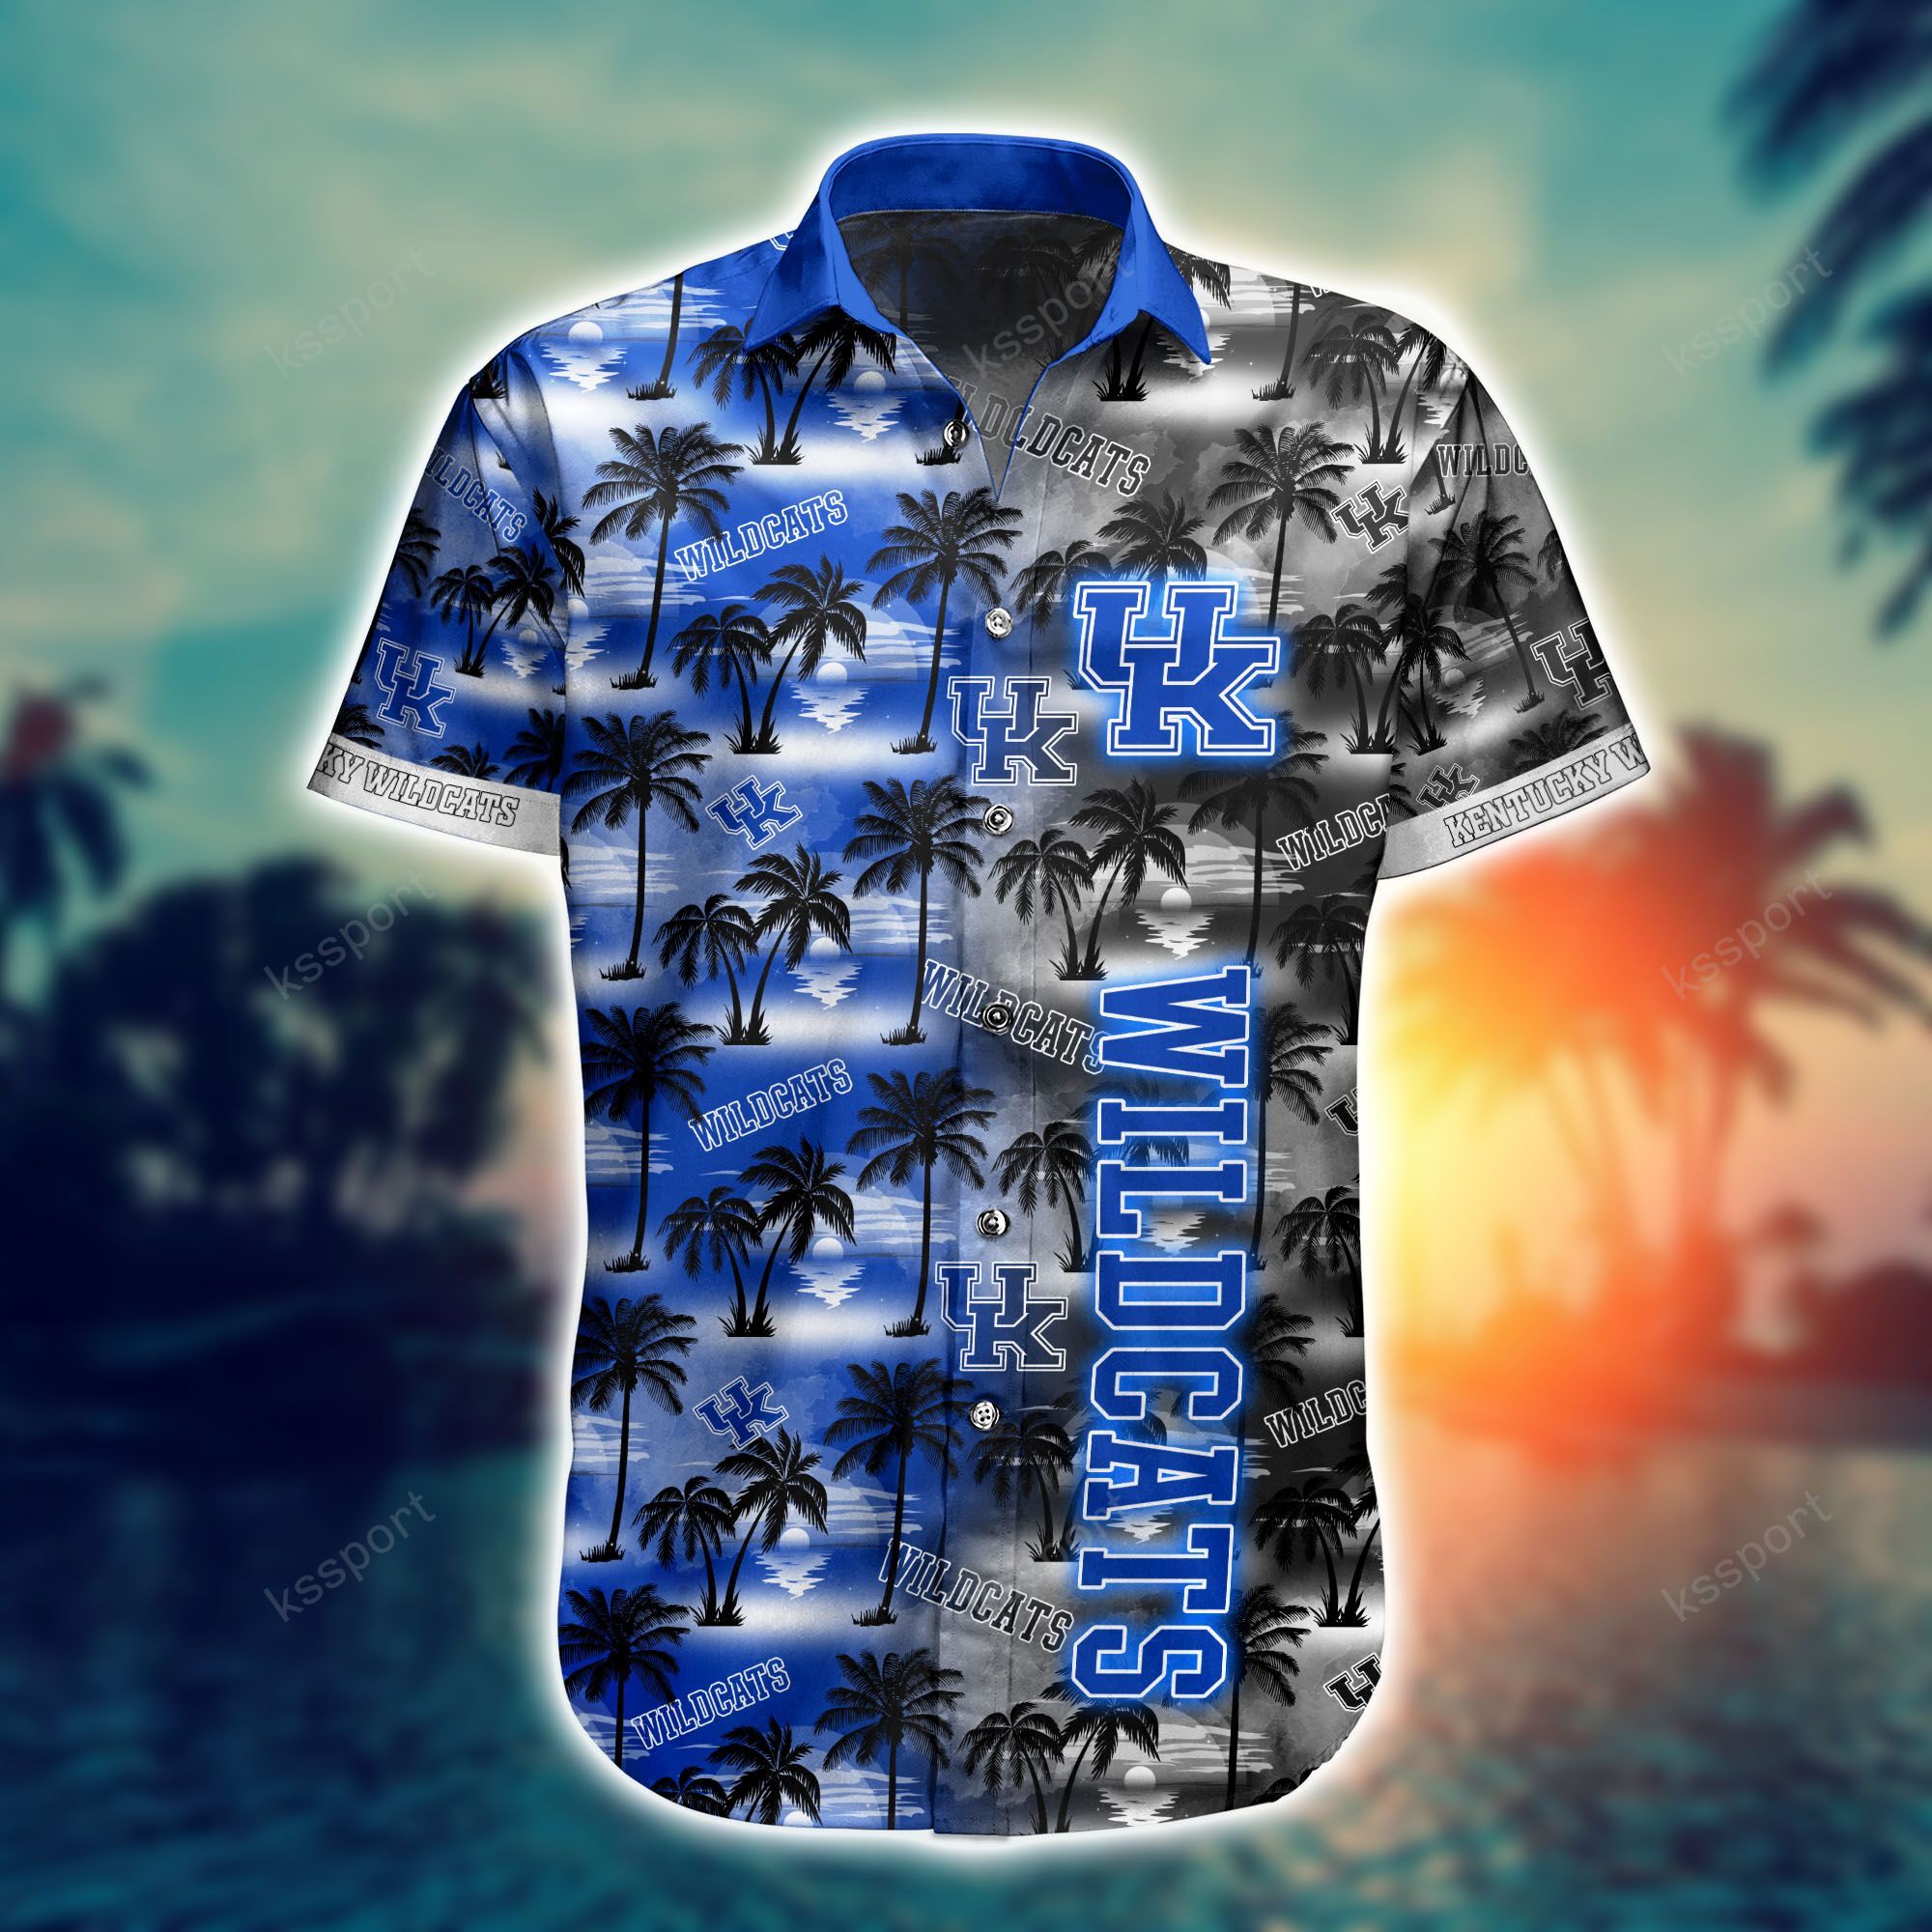 Hawaiian shirt and shorts is a great way to look stylish at a beach party 71